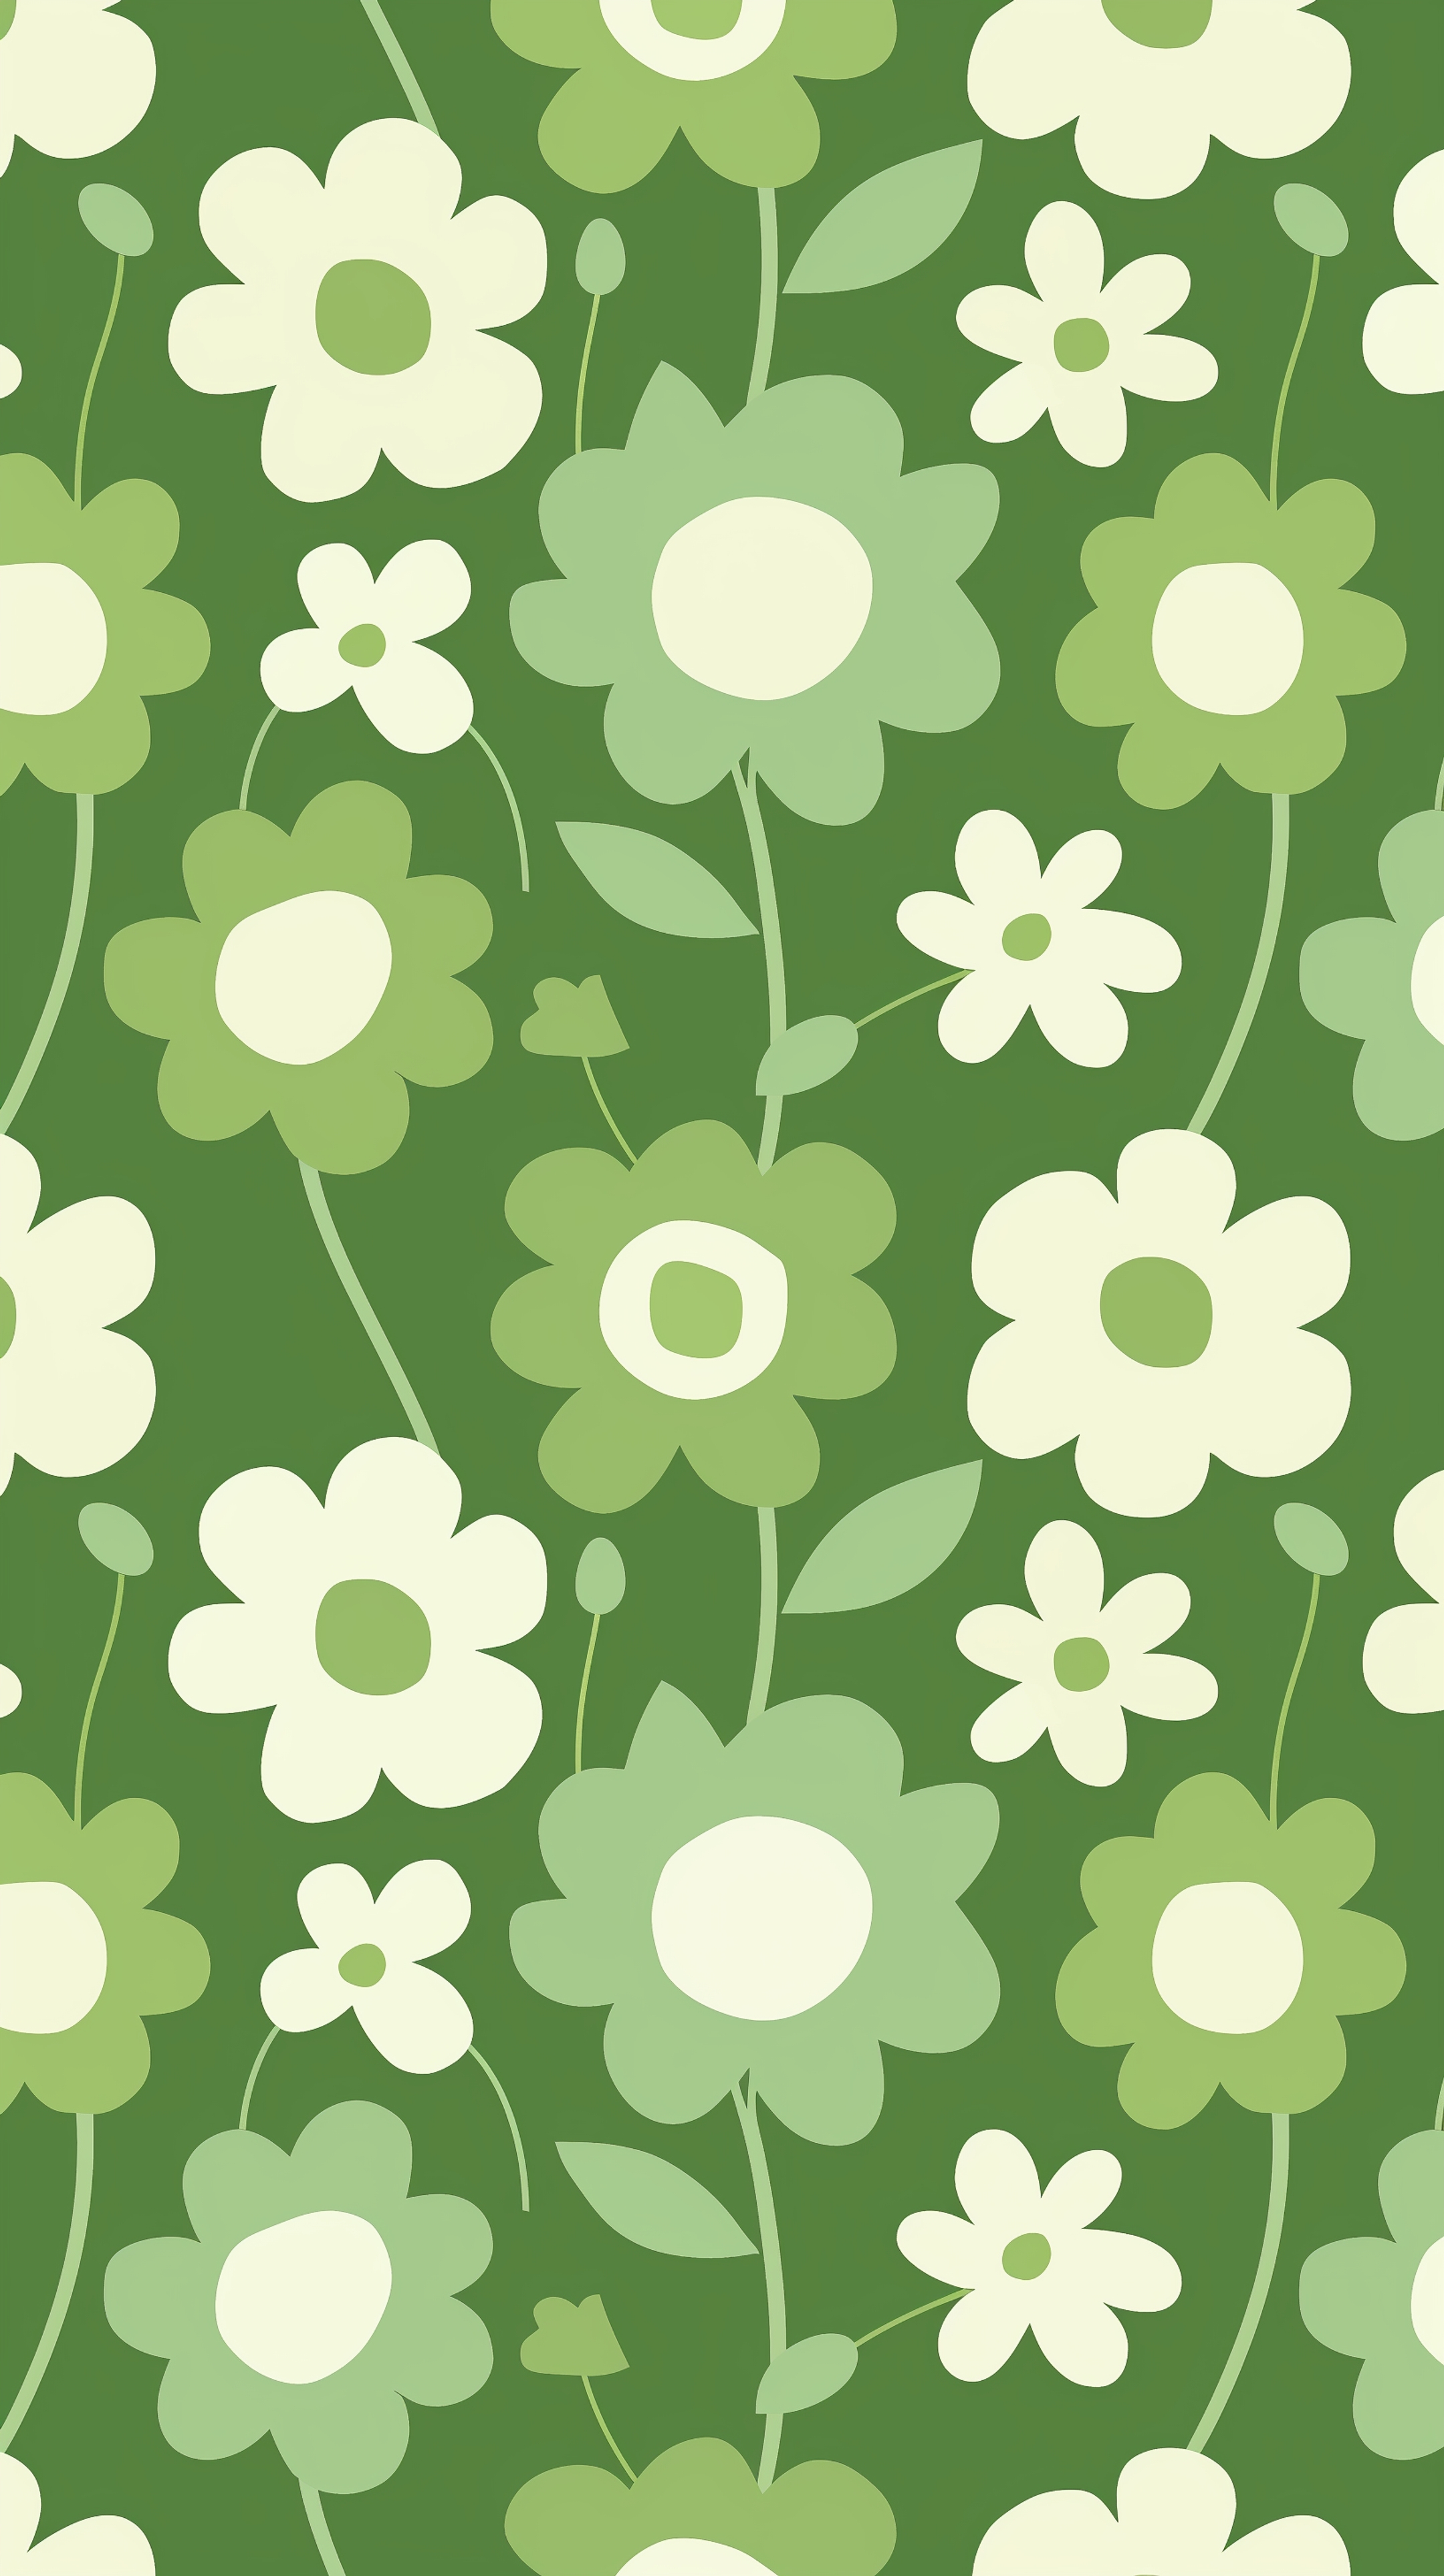 Green and White Floral Pattern for Kids Tapeta na zeď[297654a0d56a4ec28c4e]